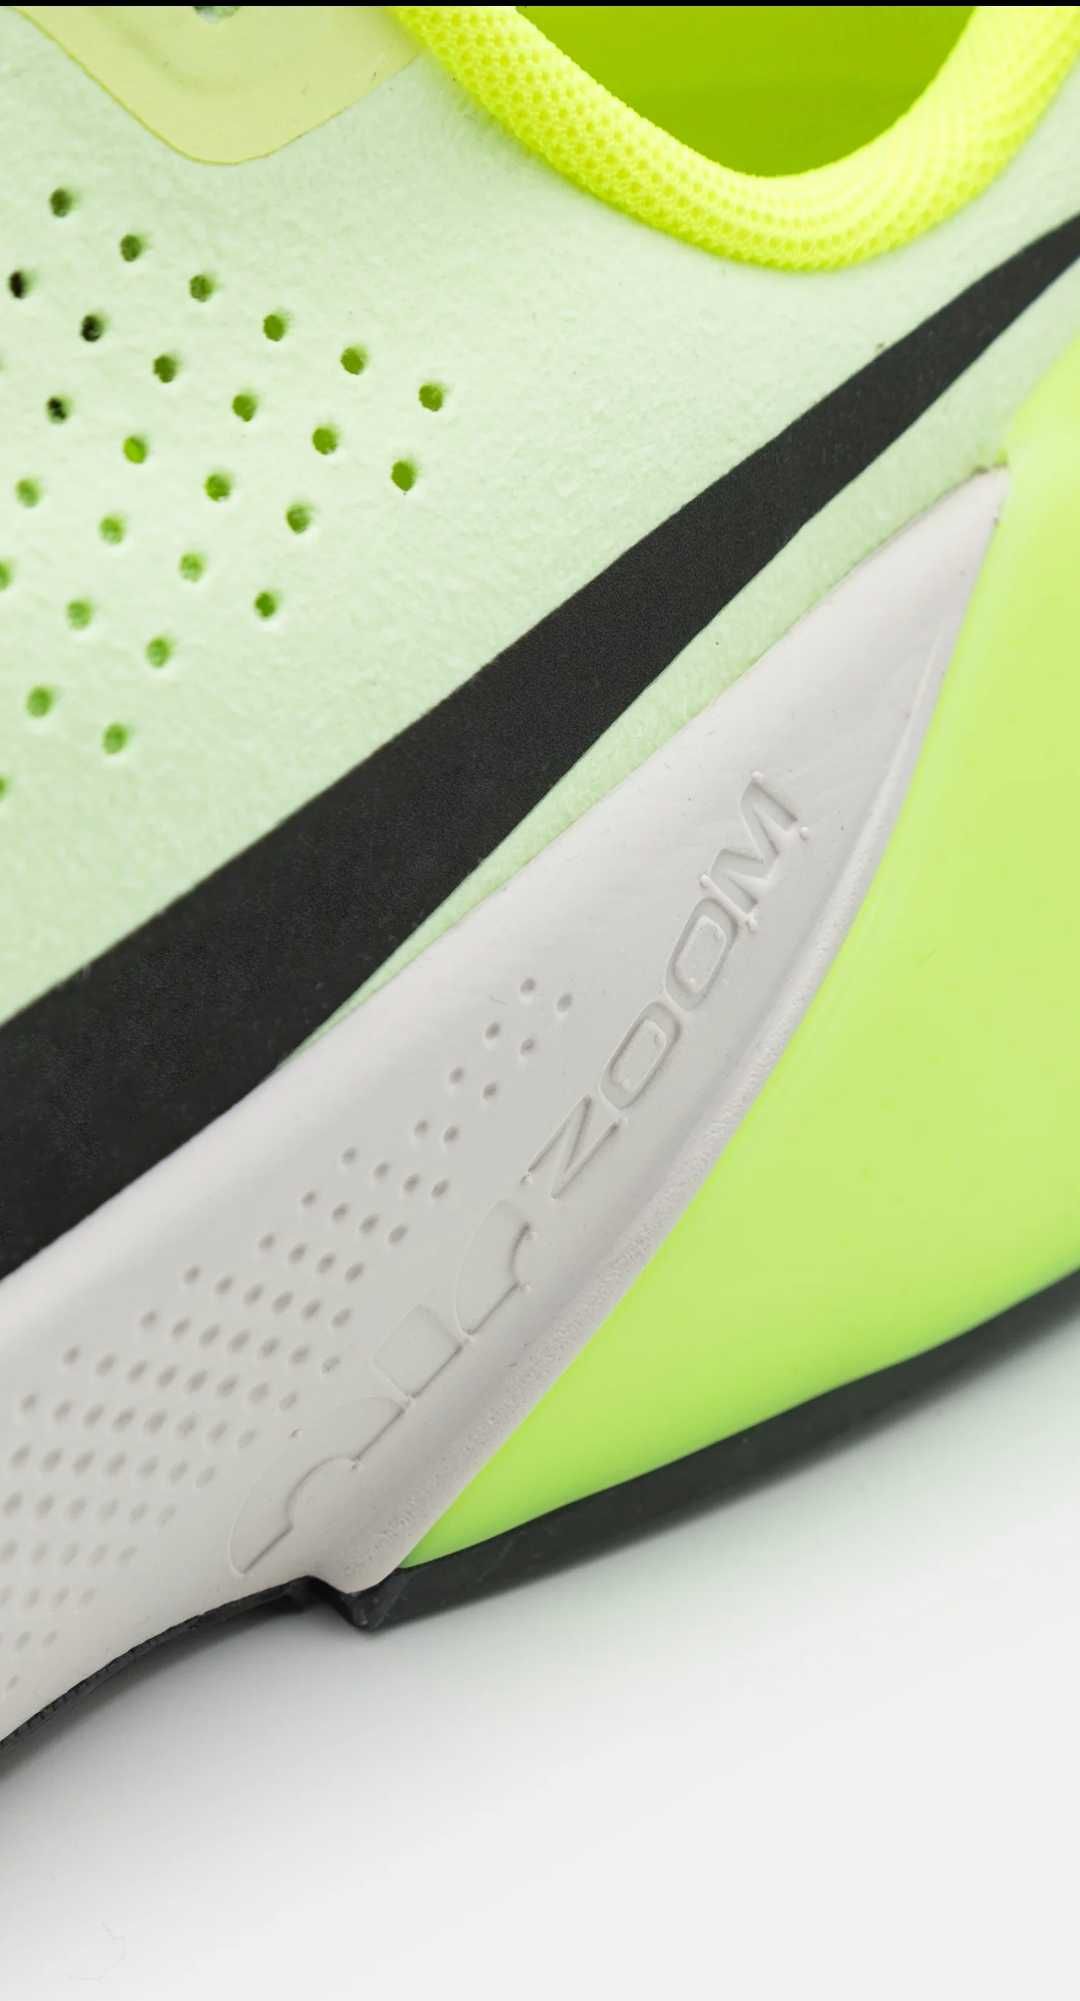 Adidasi Nike Performance
AIR ZOOM TR 1 - Pantofi training